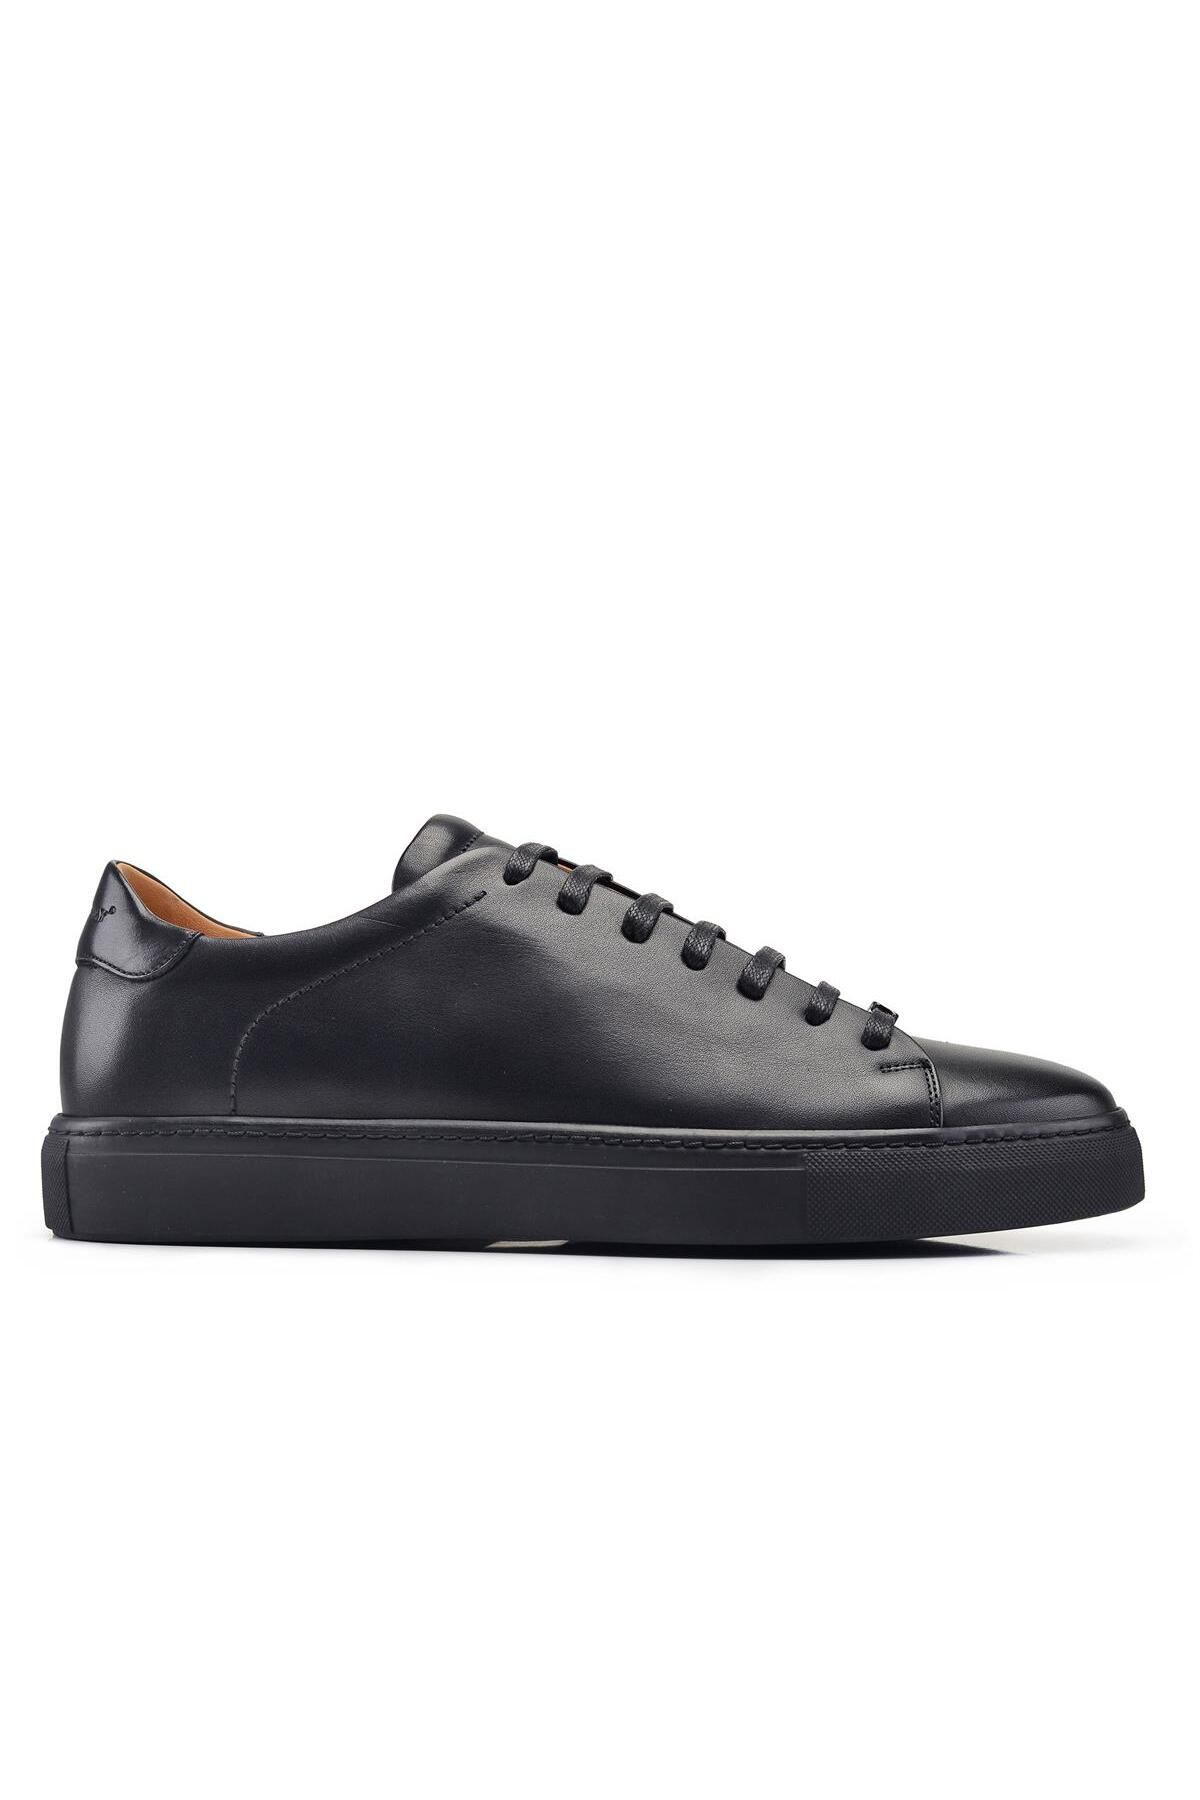 Nevzat Onay Siyah Bağcıklı Sneaker -76841-